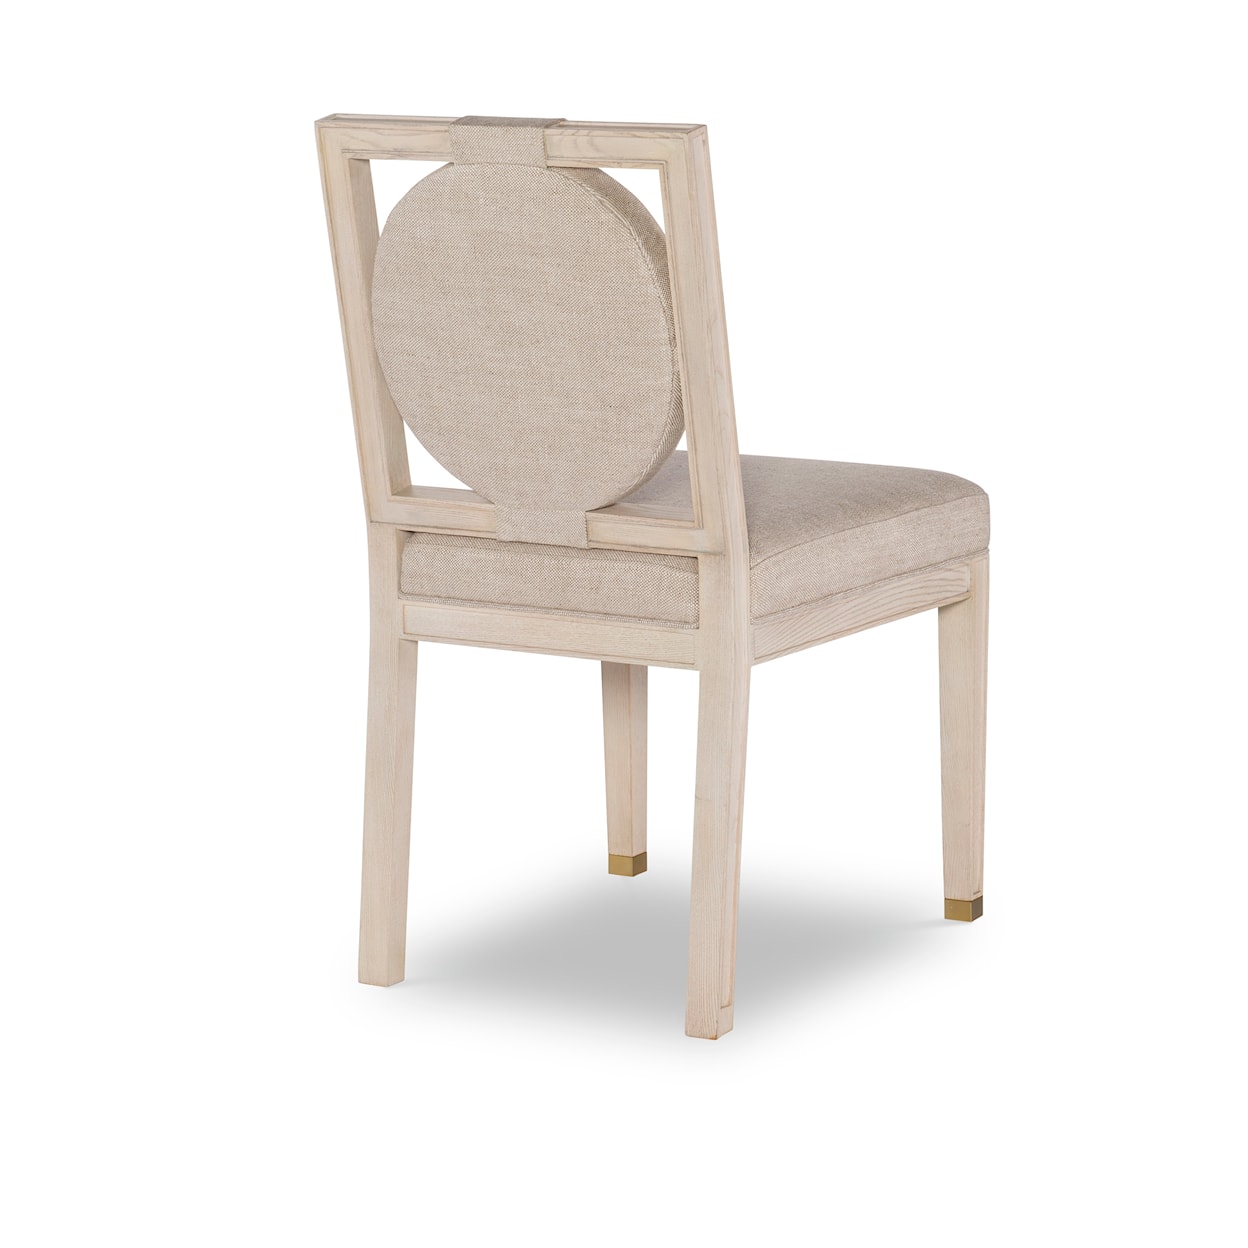 Century Monarch Fine Furniture Monarch Chair